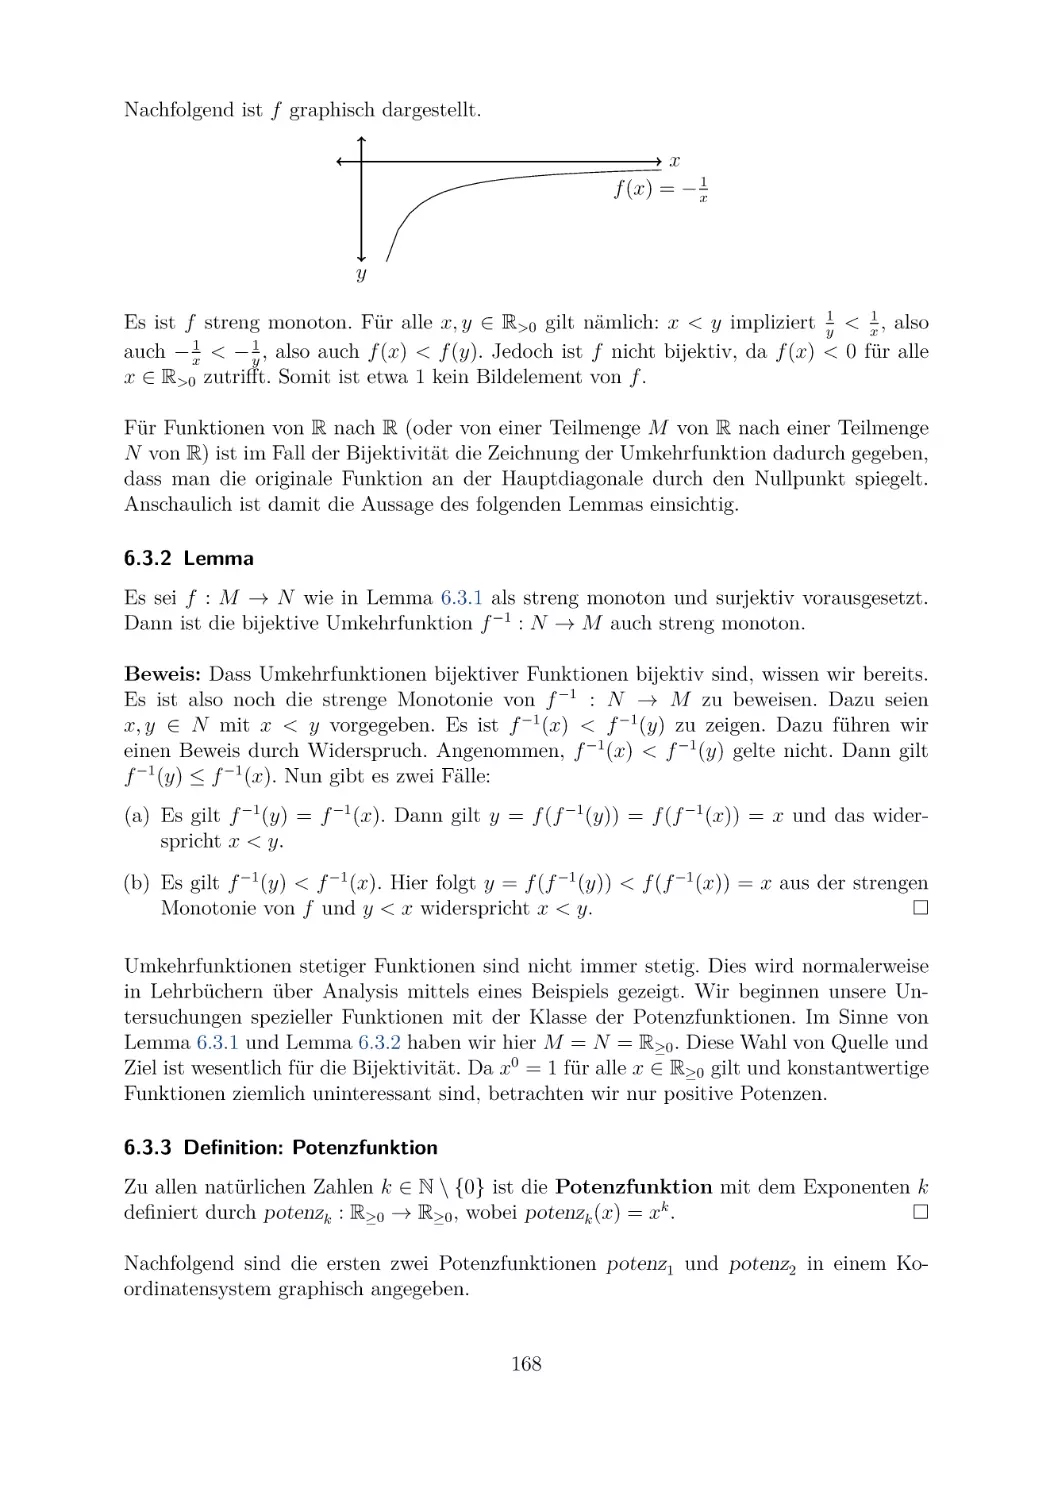 6.3.2 Lemma
6.3.3 Definition